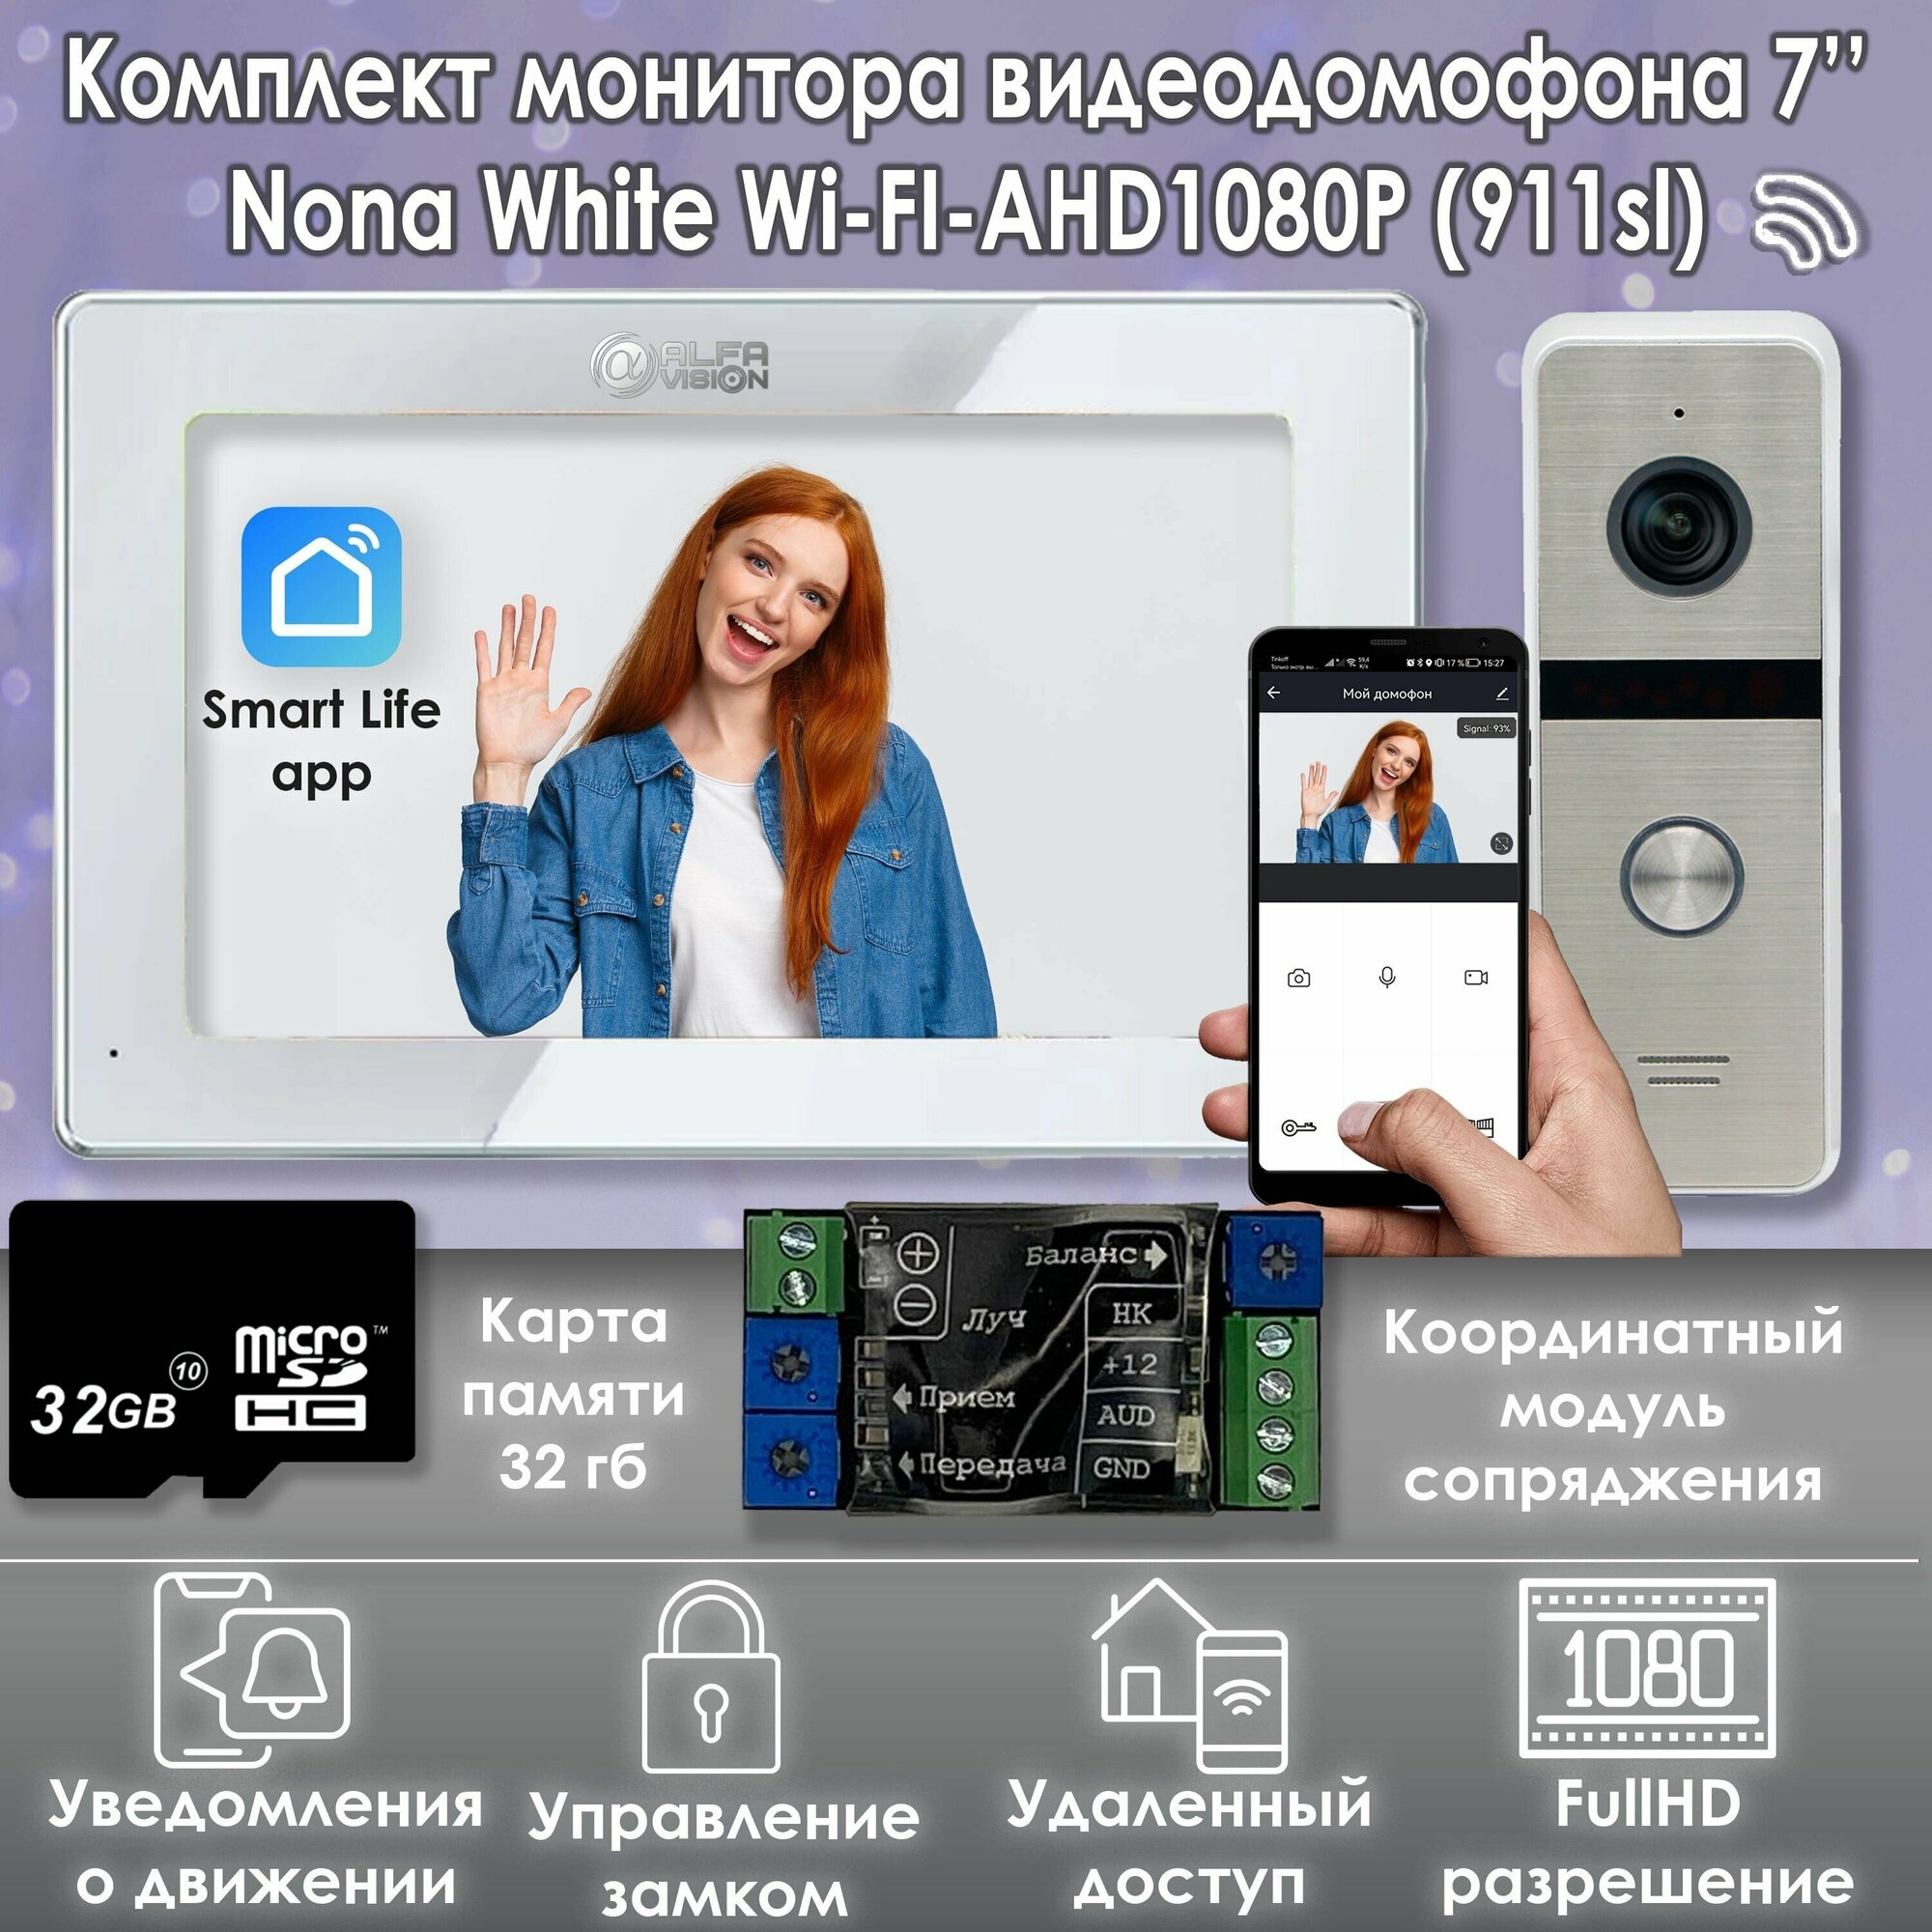 Комплект видеодомофона Nona White Wi-Fi KIT AHD1080P (911sl) + Модуль сопряжения "Луч-БМ"+ Карта памяти